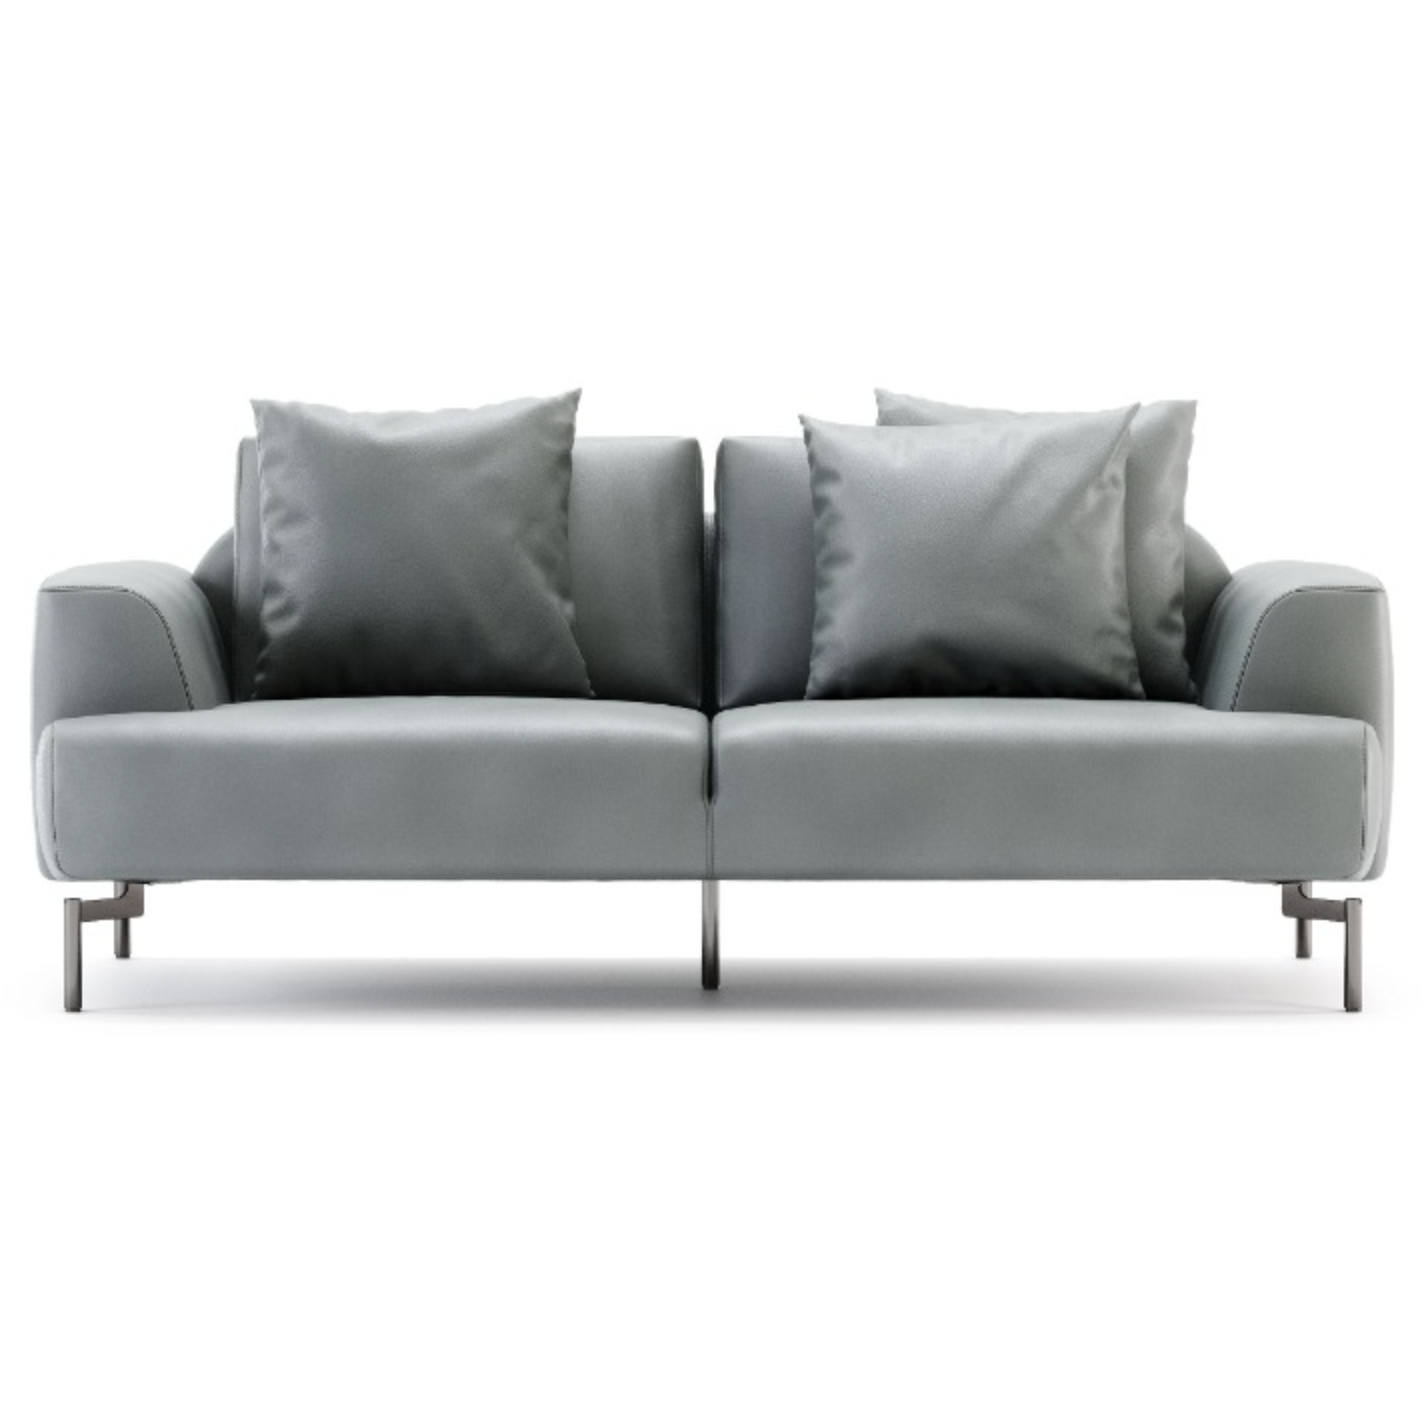 Domkapa Taís 2-Seater Sofa - Customisable | Modern Furniture + Decor